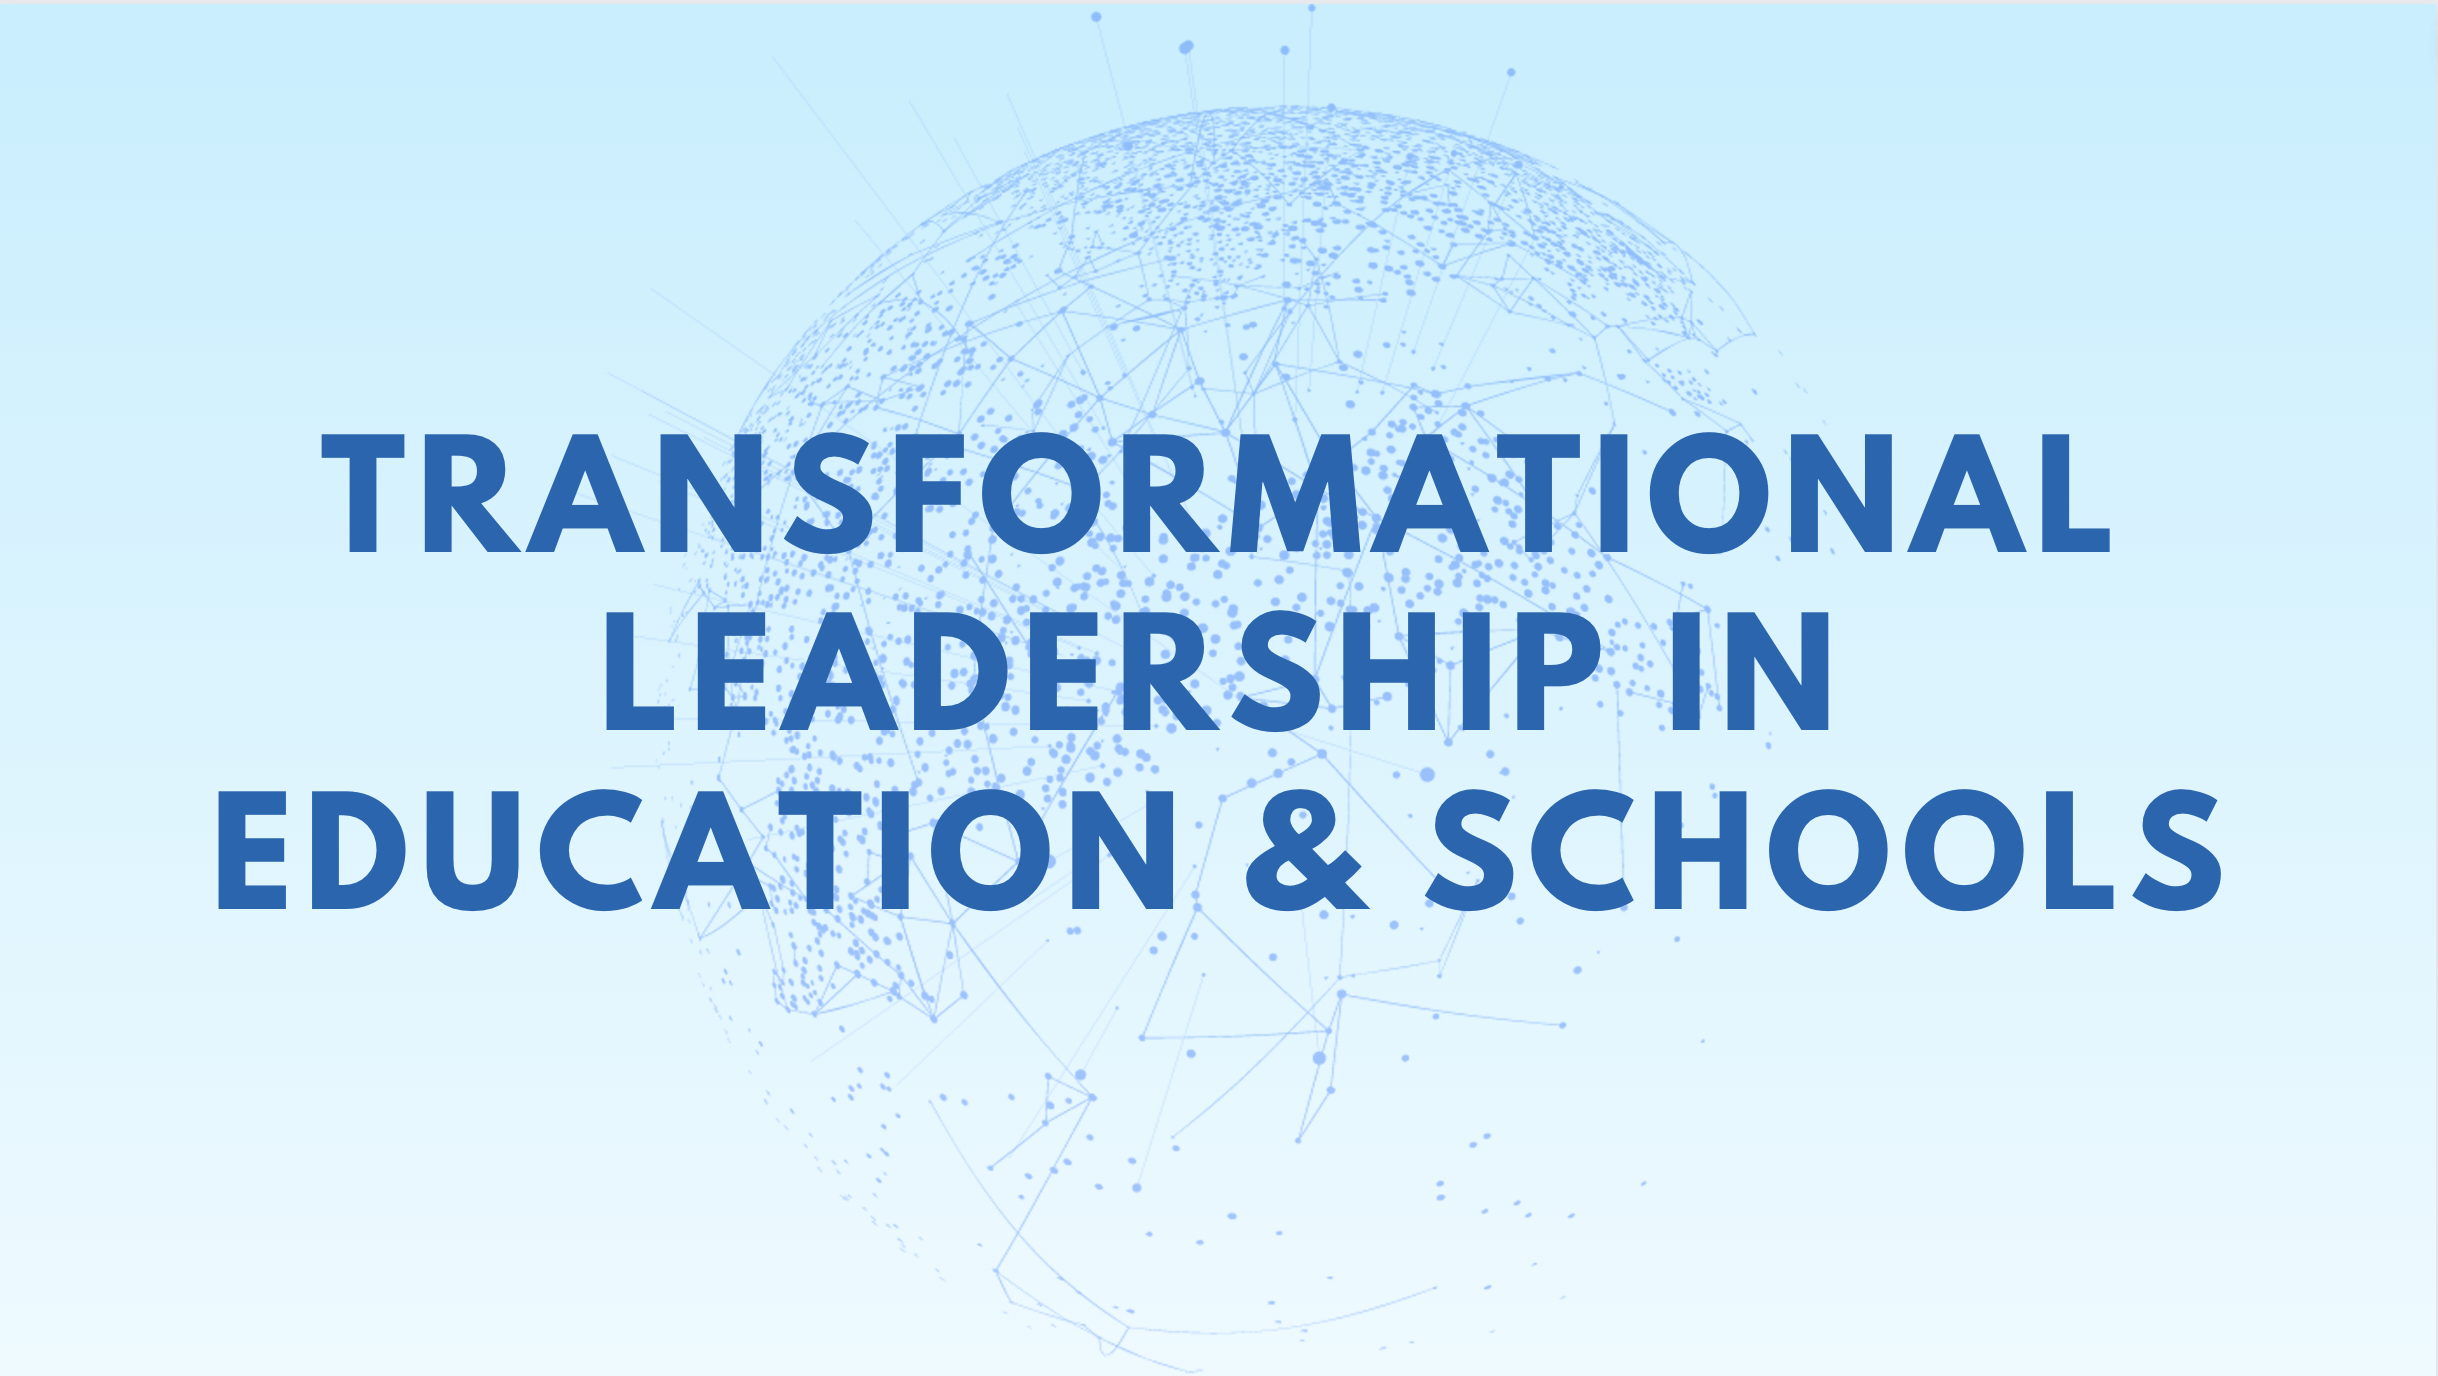 characteristics of transformational leadership in education